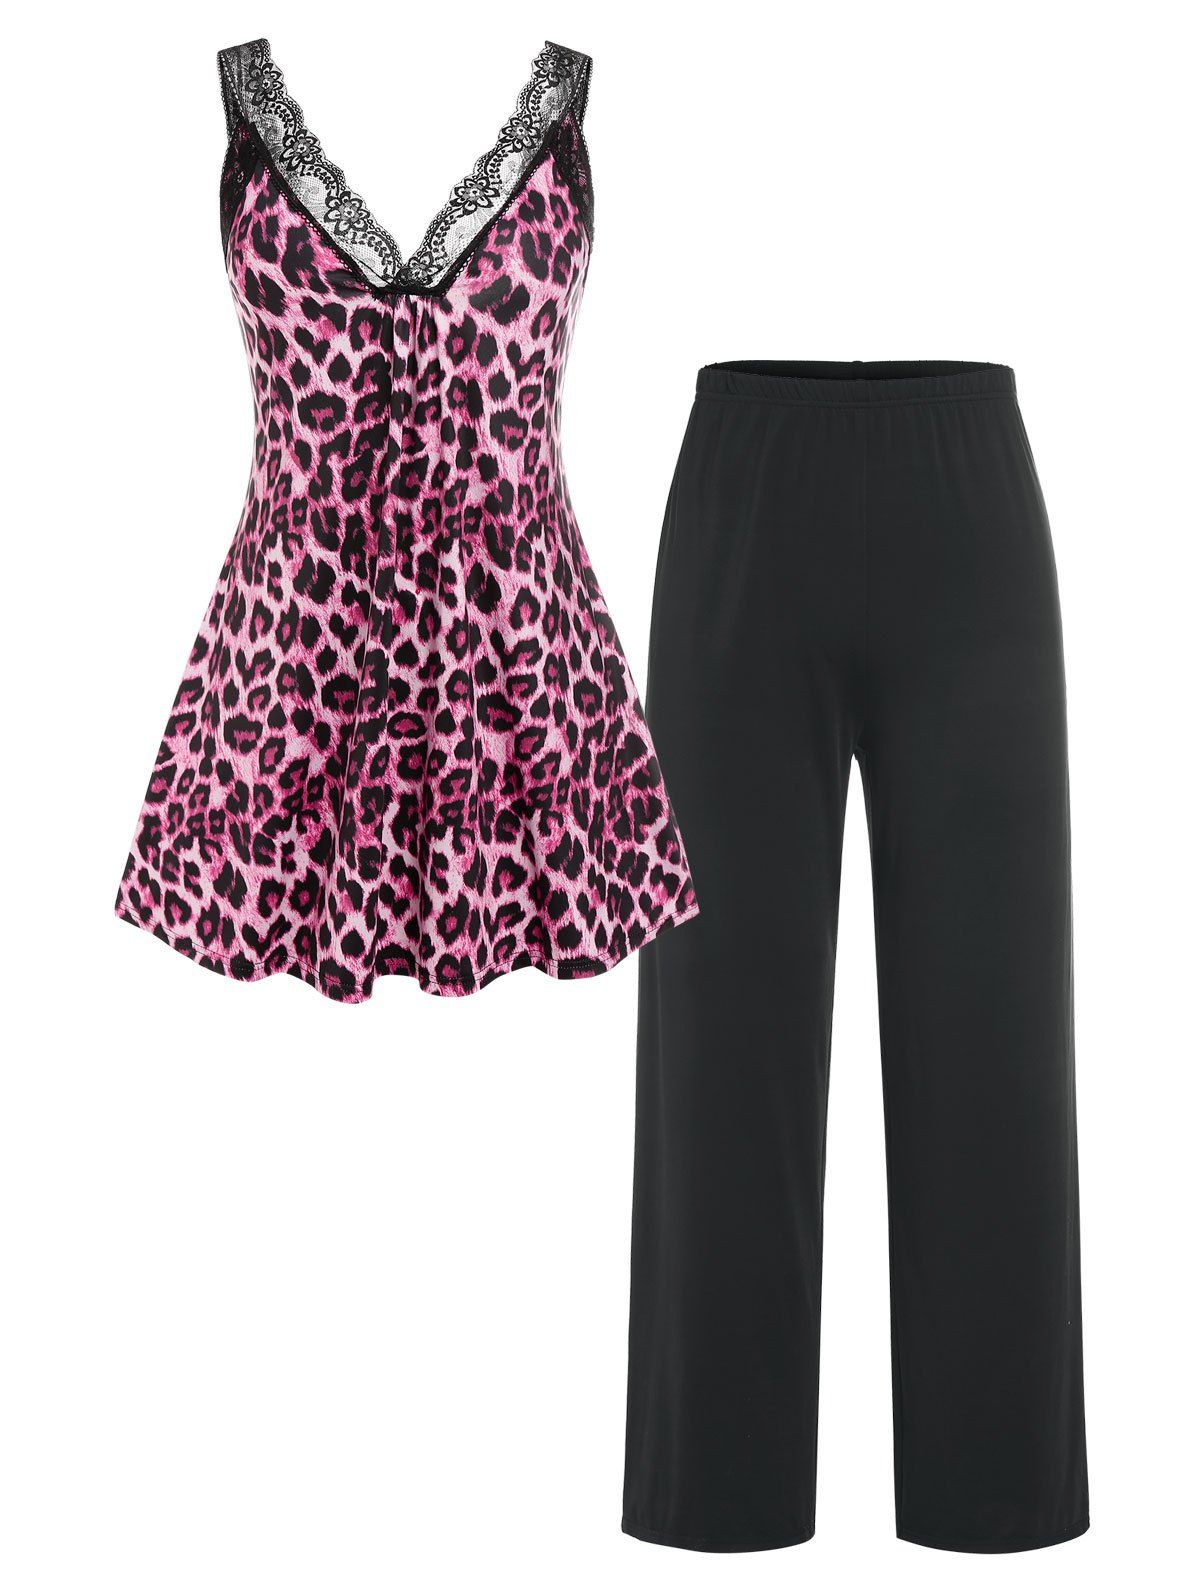 Plus Size Leopard Print Tank Top and Pants Pajamas Set - LIGHT PINK 5X